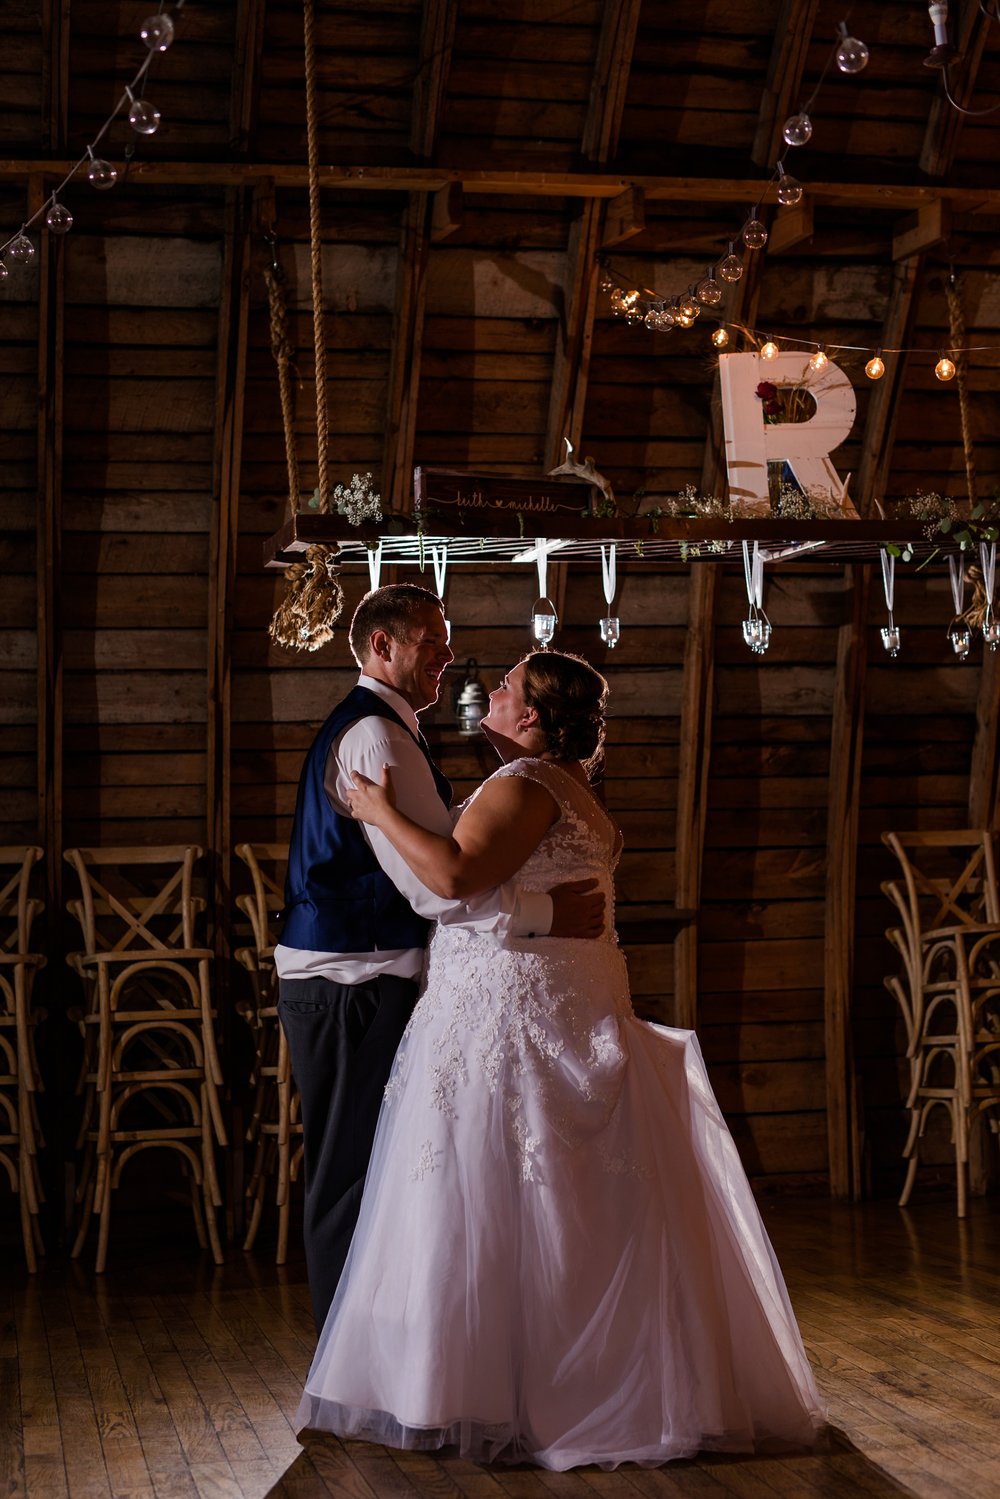 Rustic Oaks, Moorhead Minnesota Outdoor, Barn Wedding by Amber Langerud | Michelle & Keith